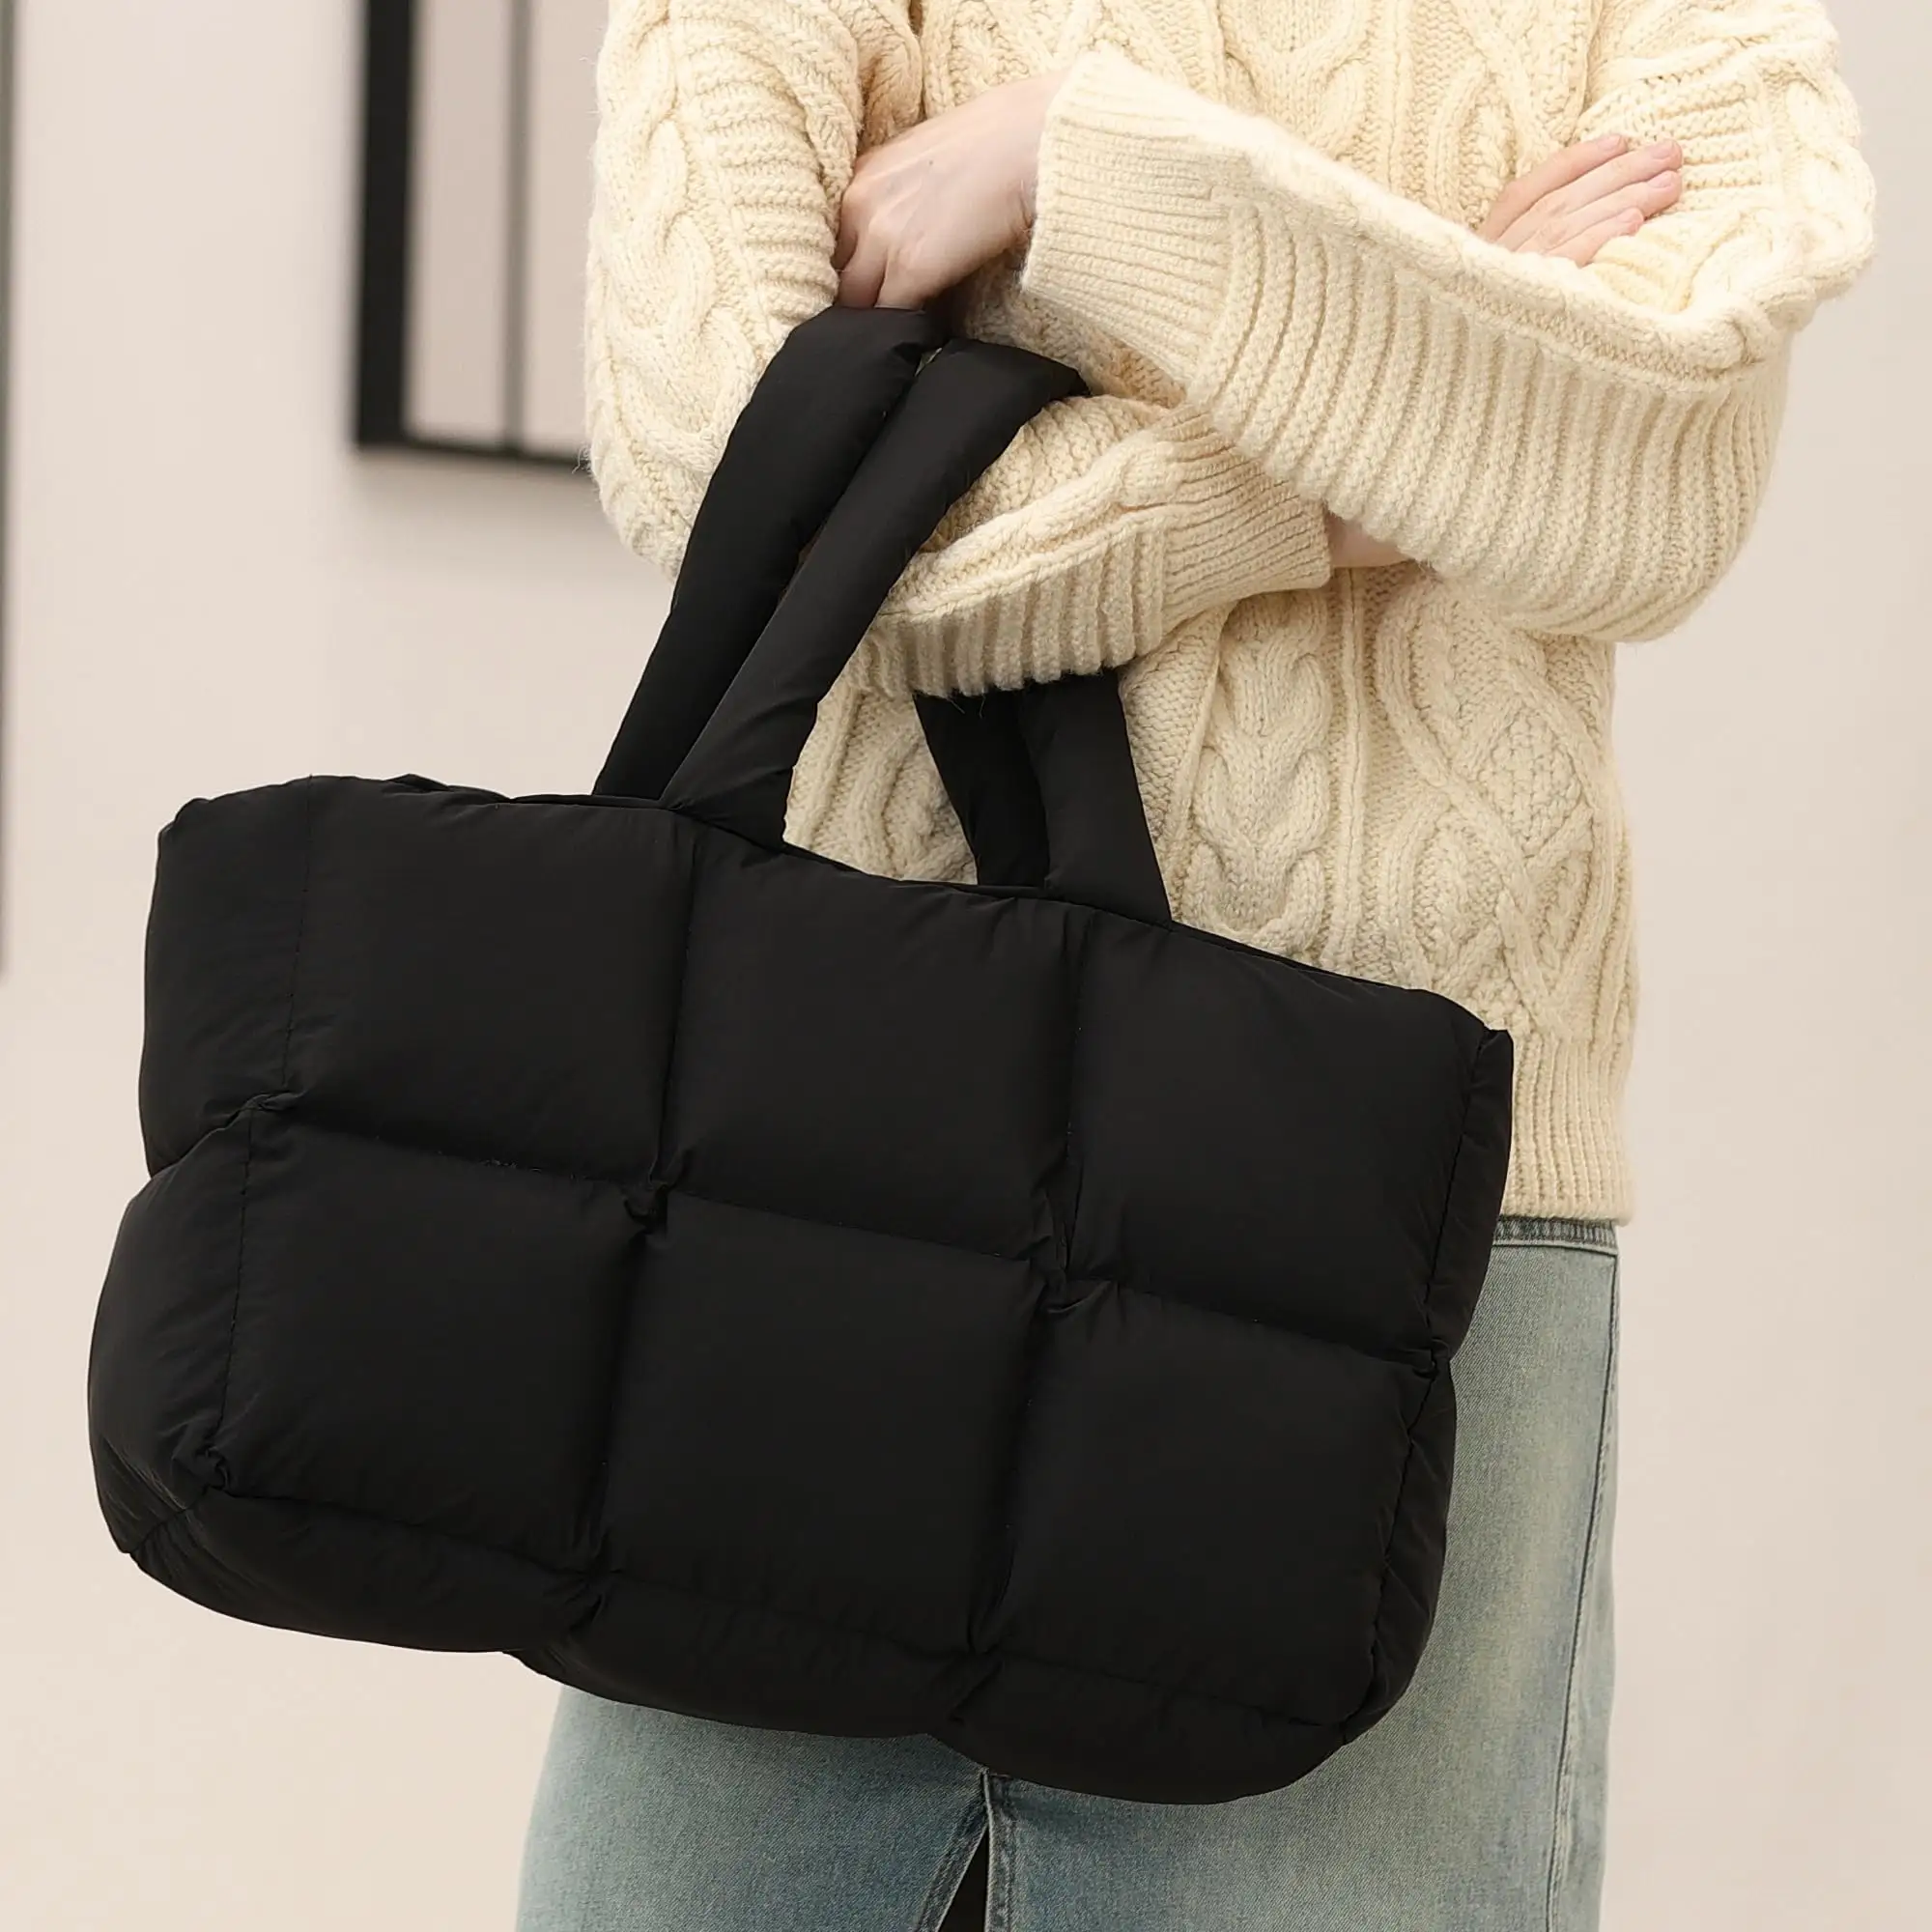 Bolsa de ombro preta acolchoada para mulheres, bolsa de mão personalizada de nylon para mulheres